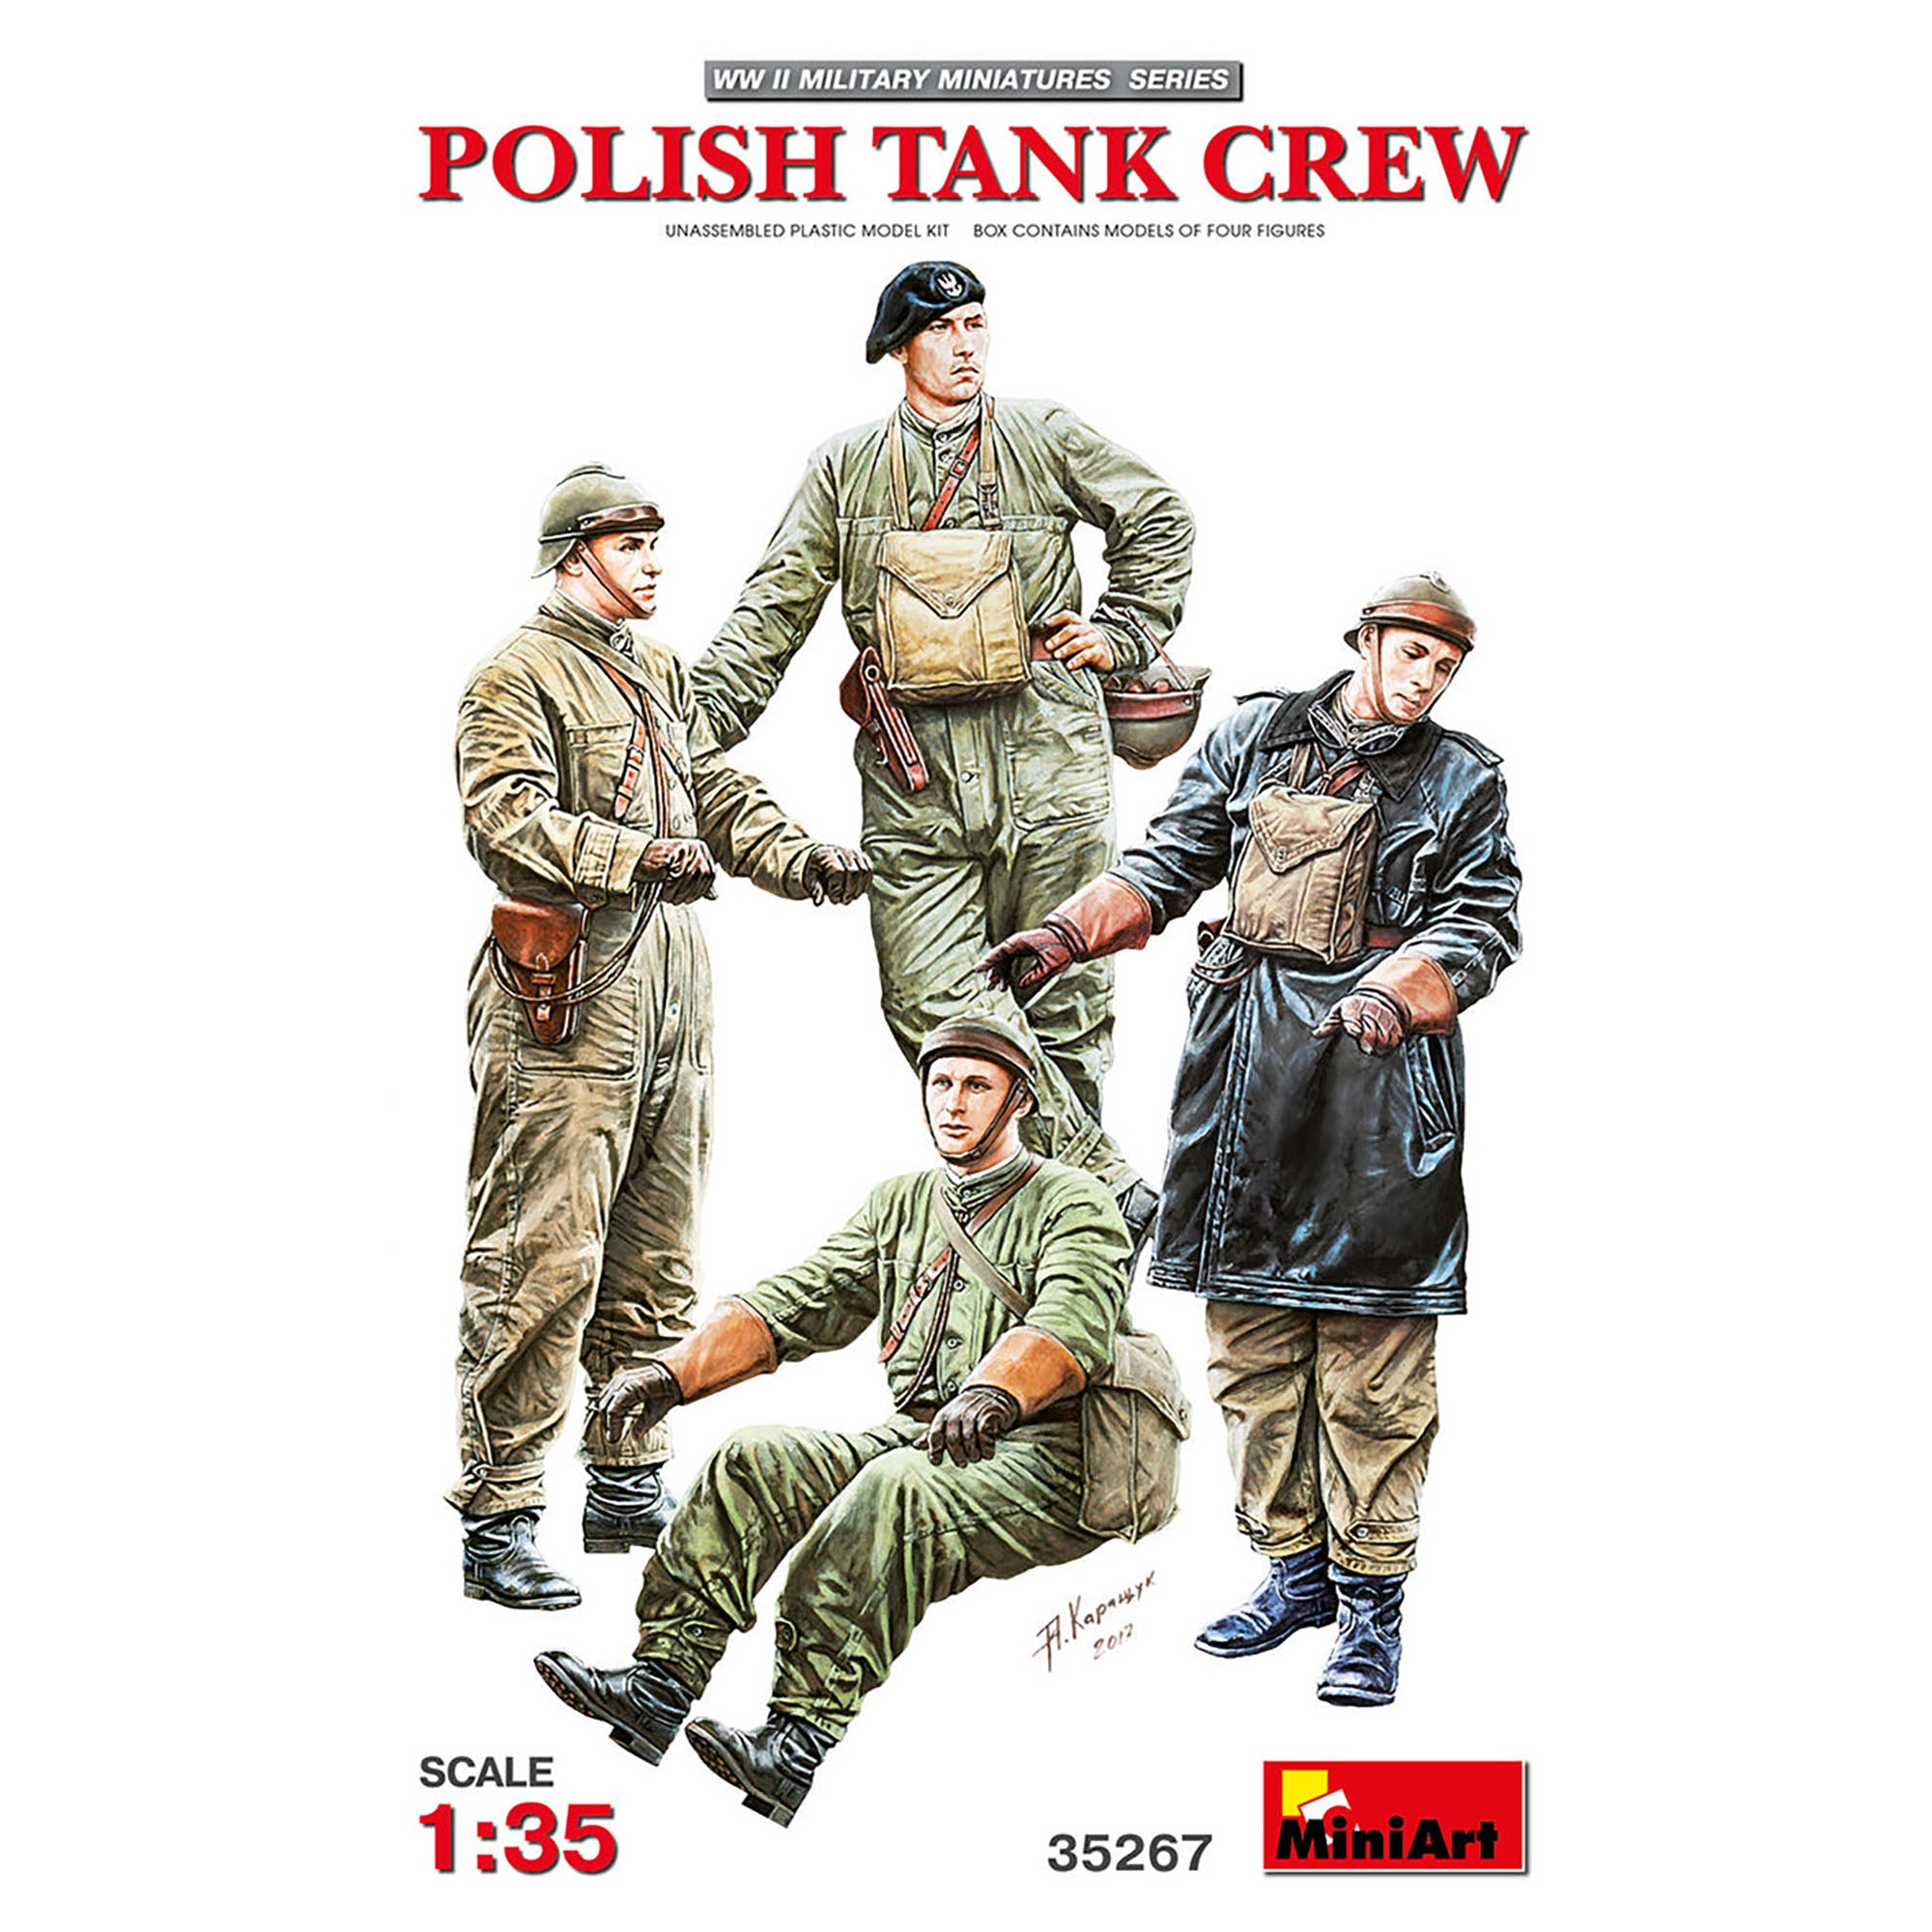 MiniArt 35267 1/35 Polish Tank Crew Model Kit